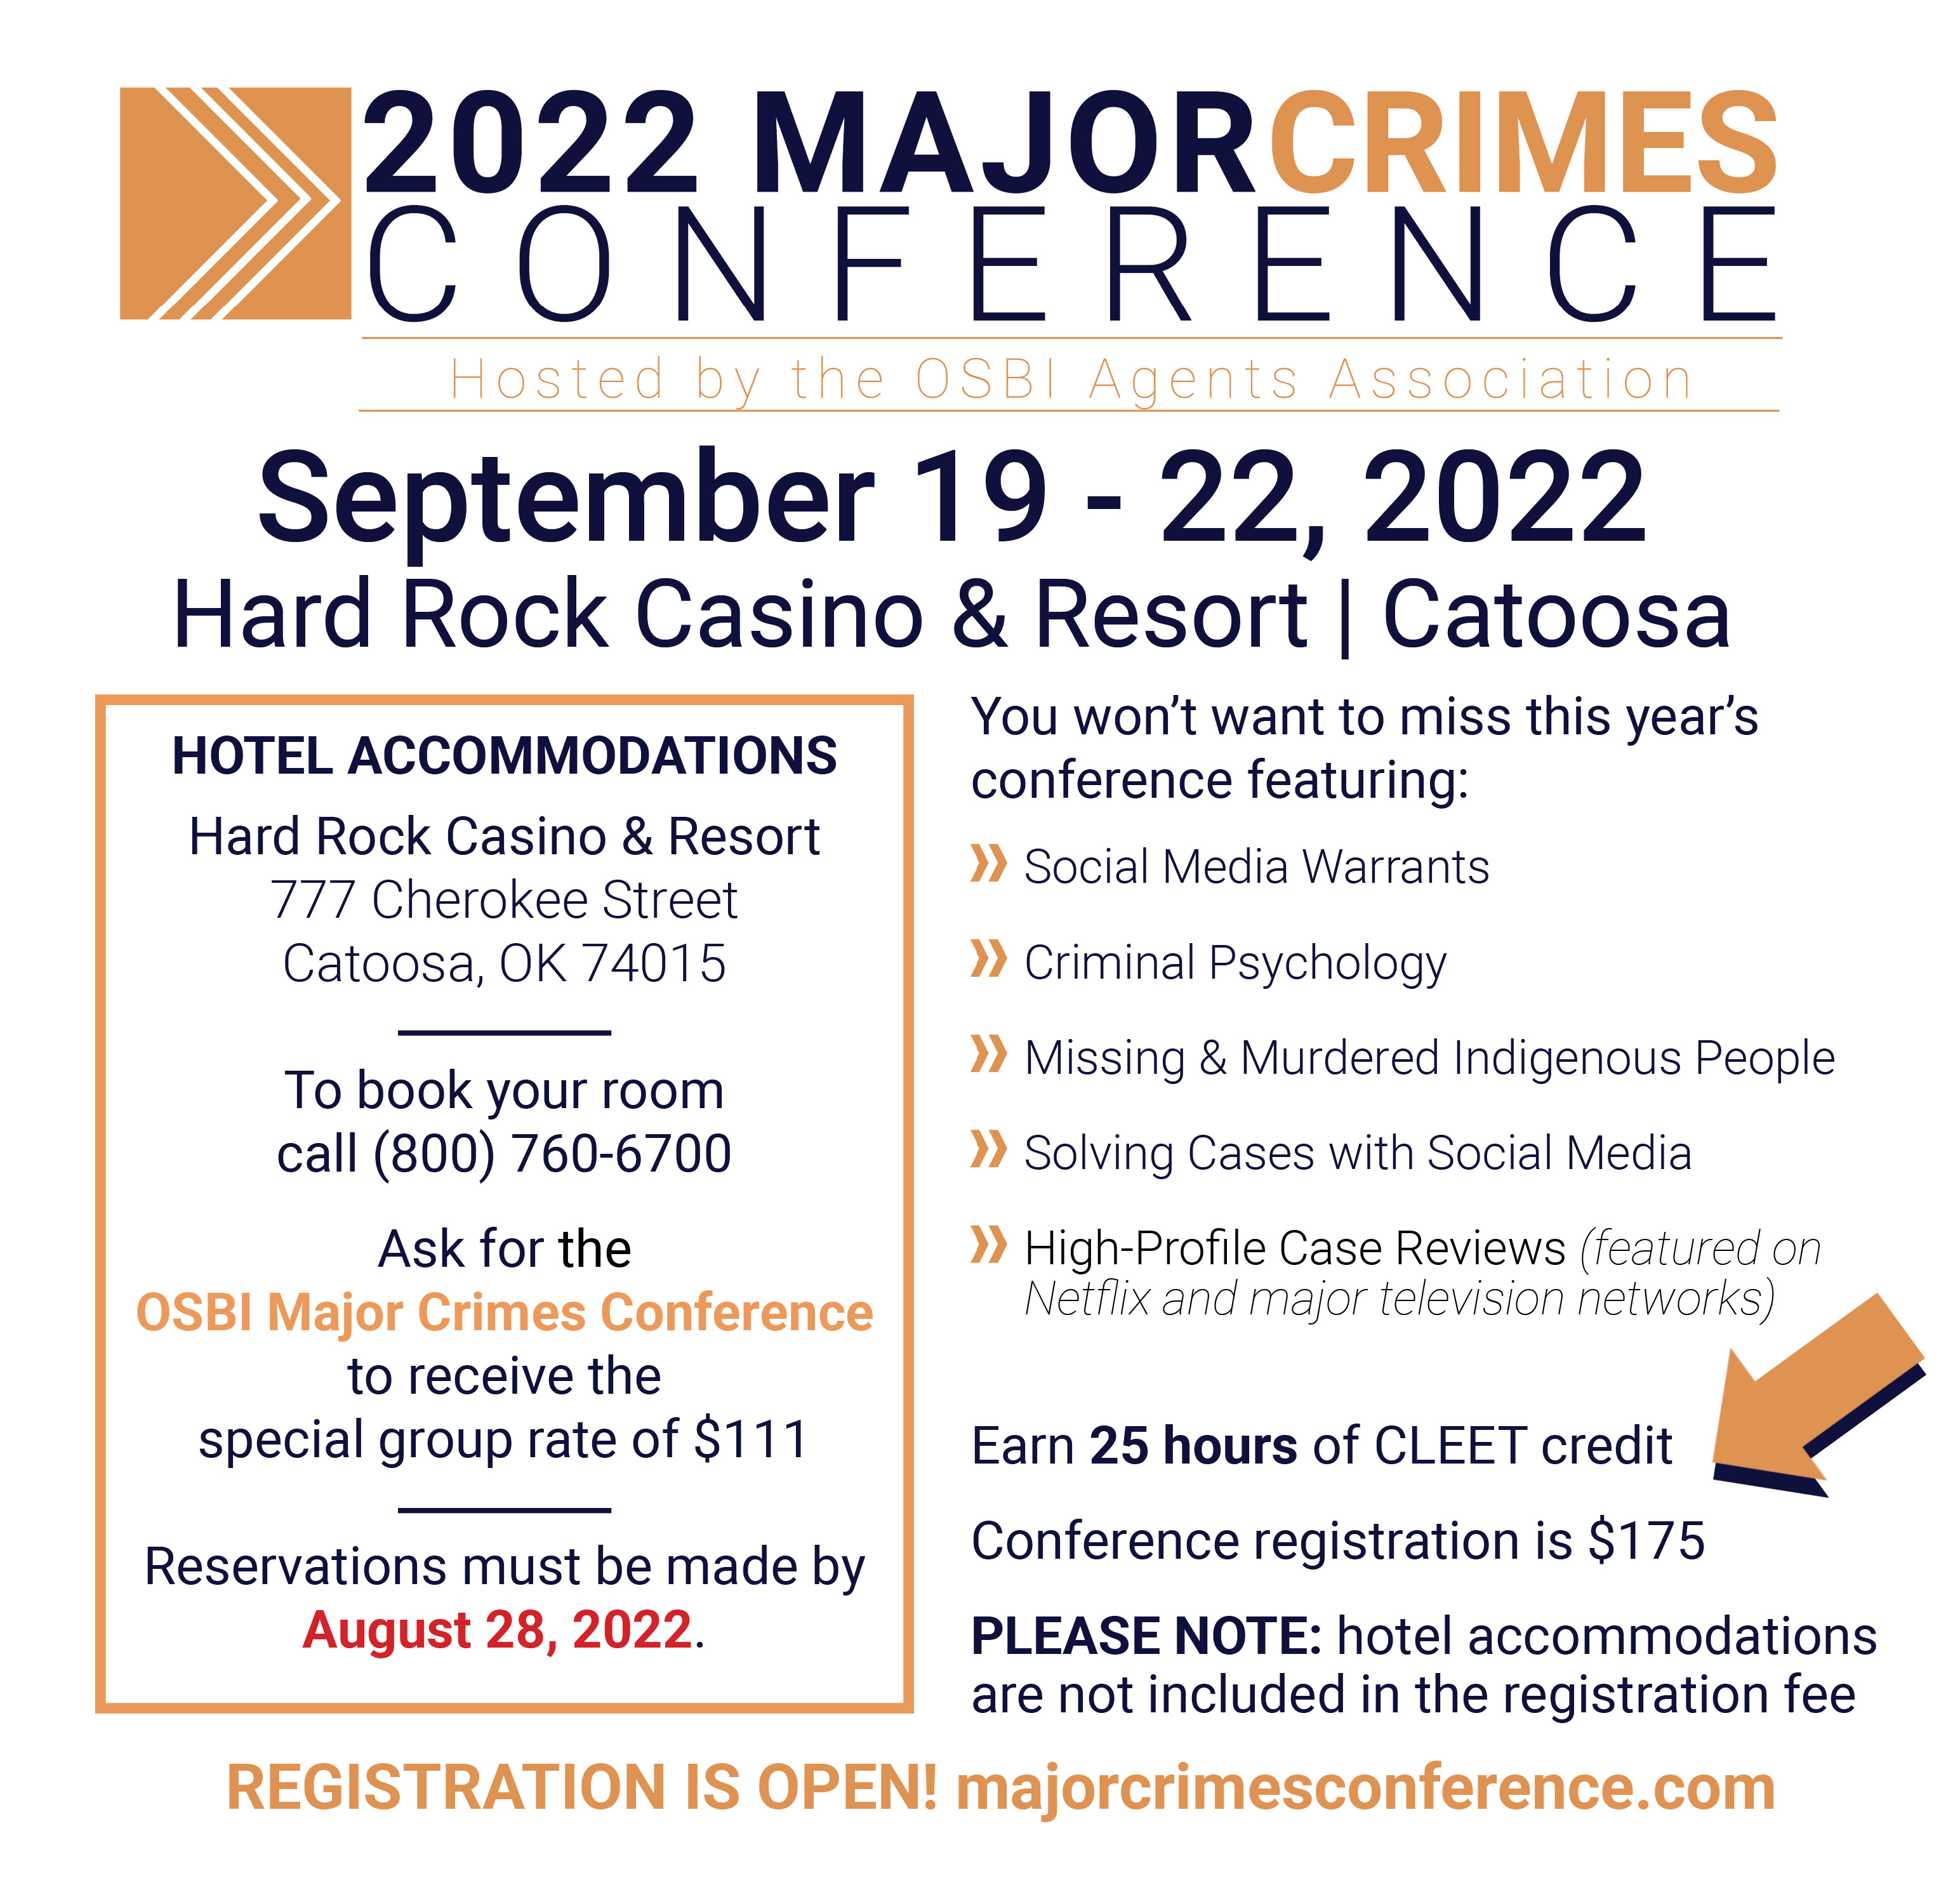 Major Crimes Conference 2022 image